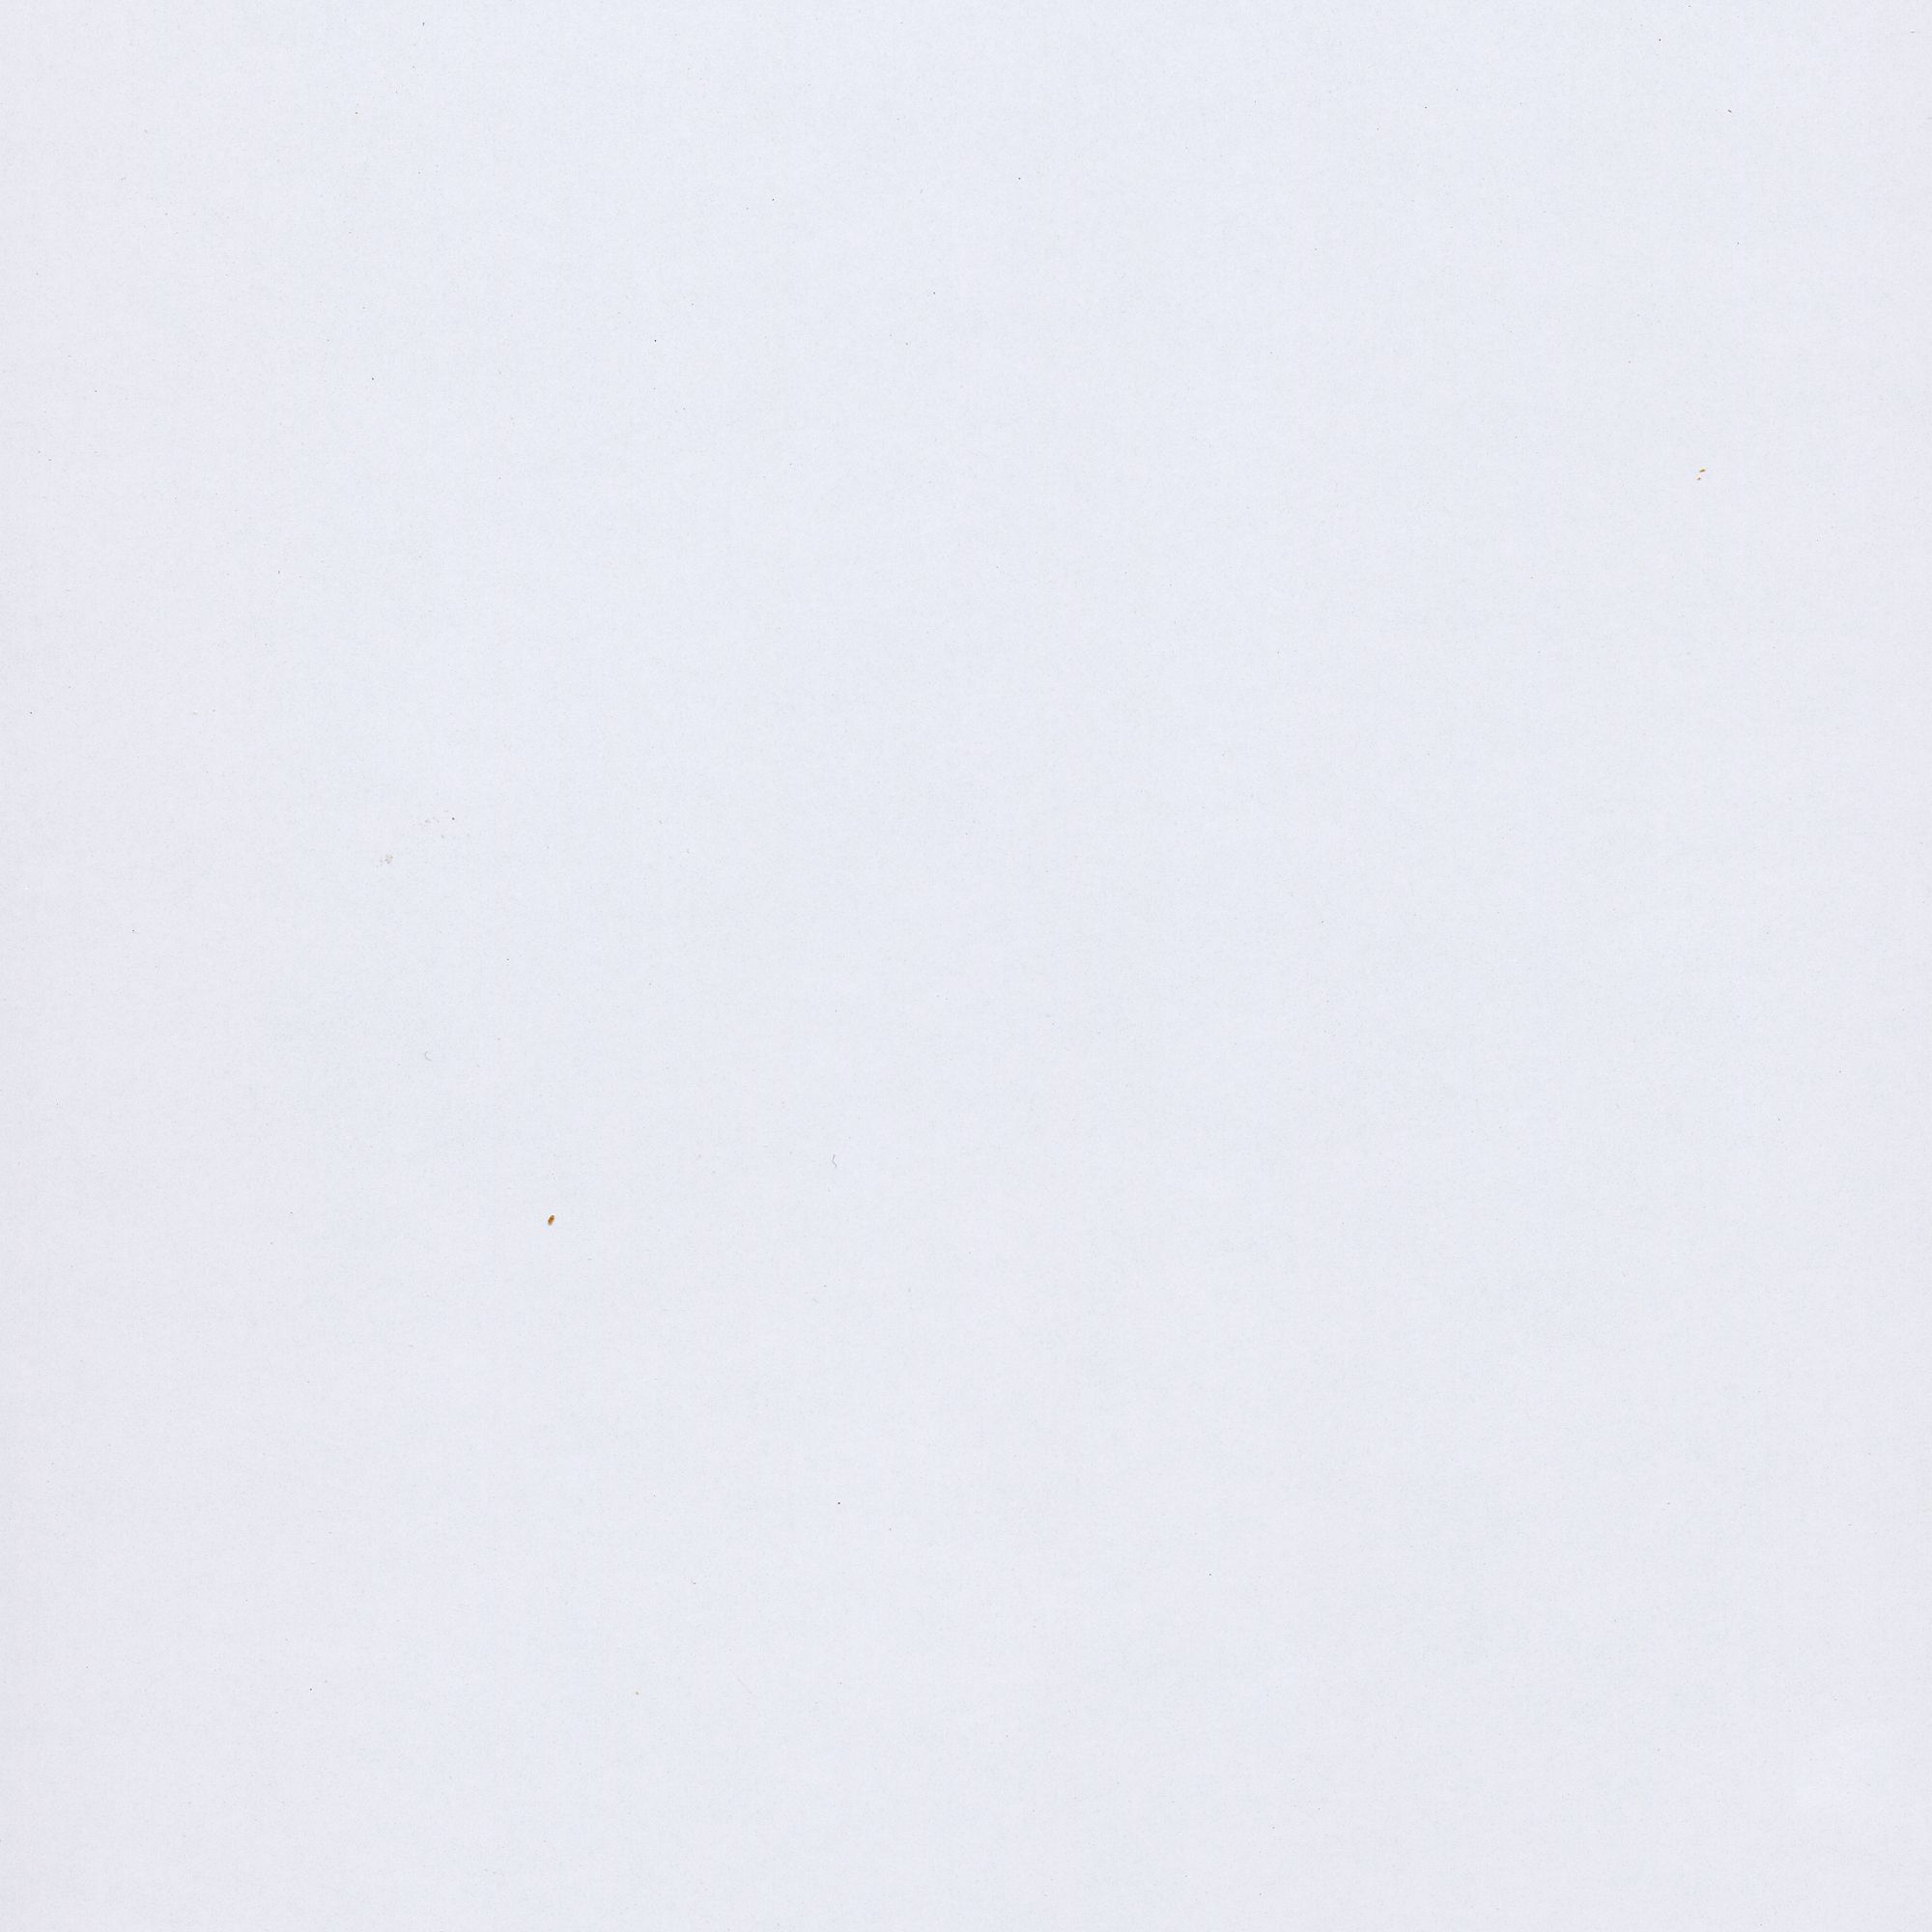 Splashwall Impressions White Laminate Panel (H)2420mm (W)585mm